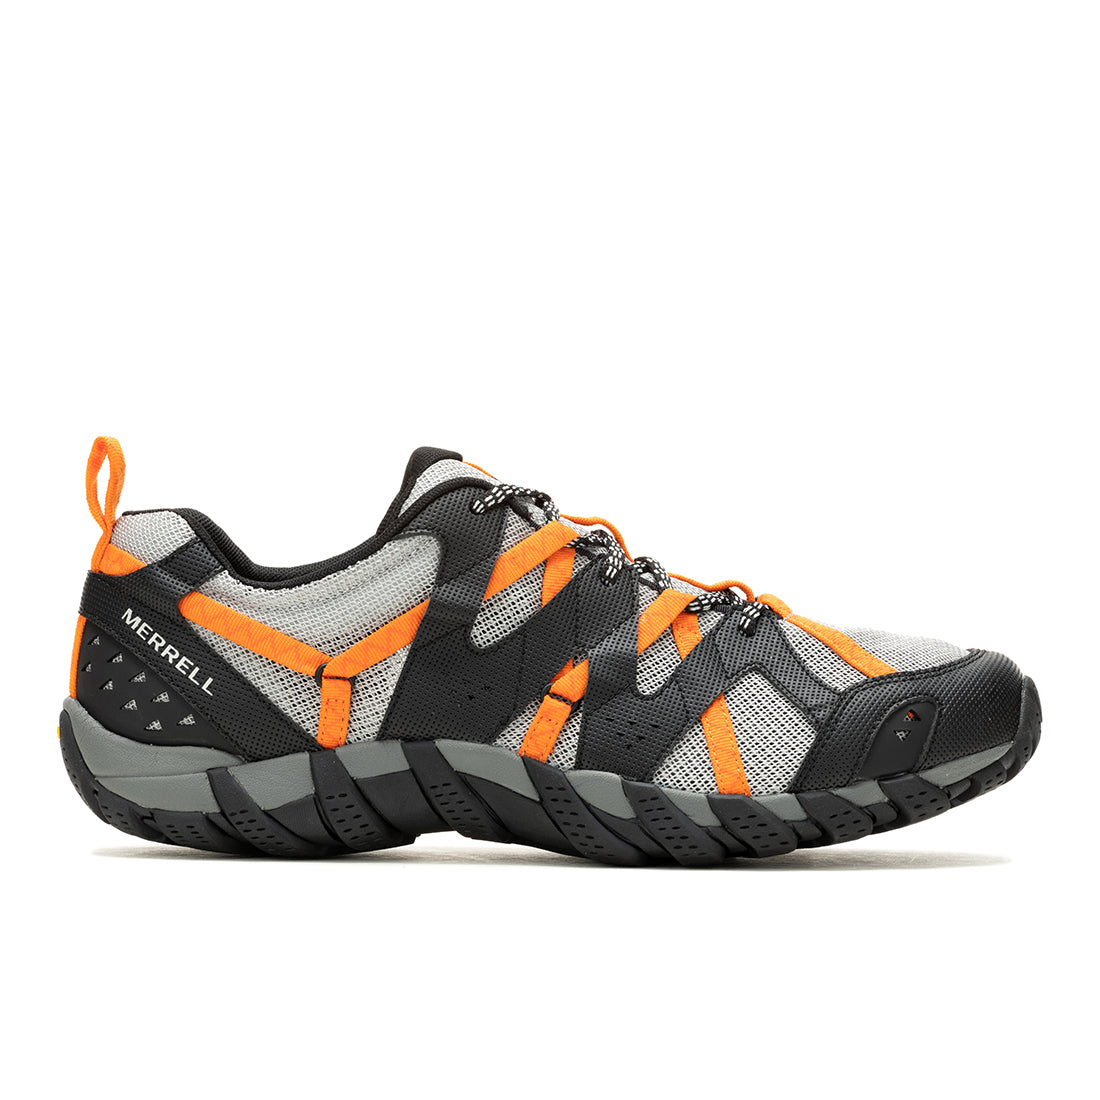 Waterpro Maipo 2 - Black/Papaya Mens Hydro Hiking Shoes